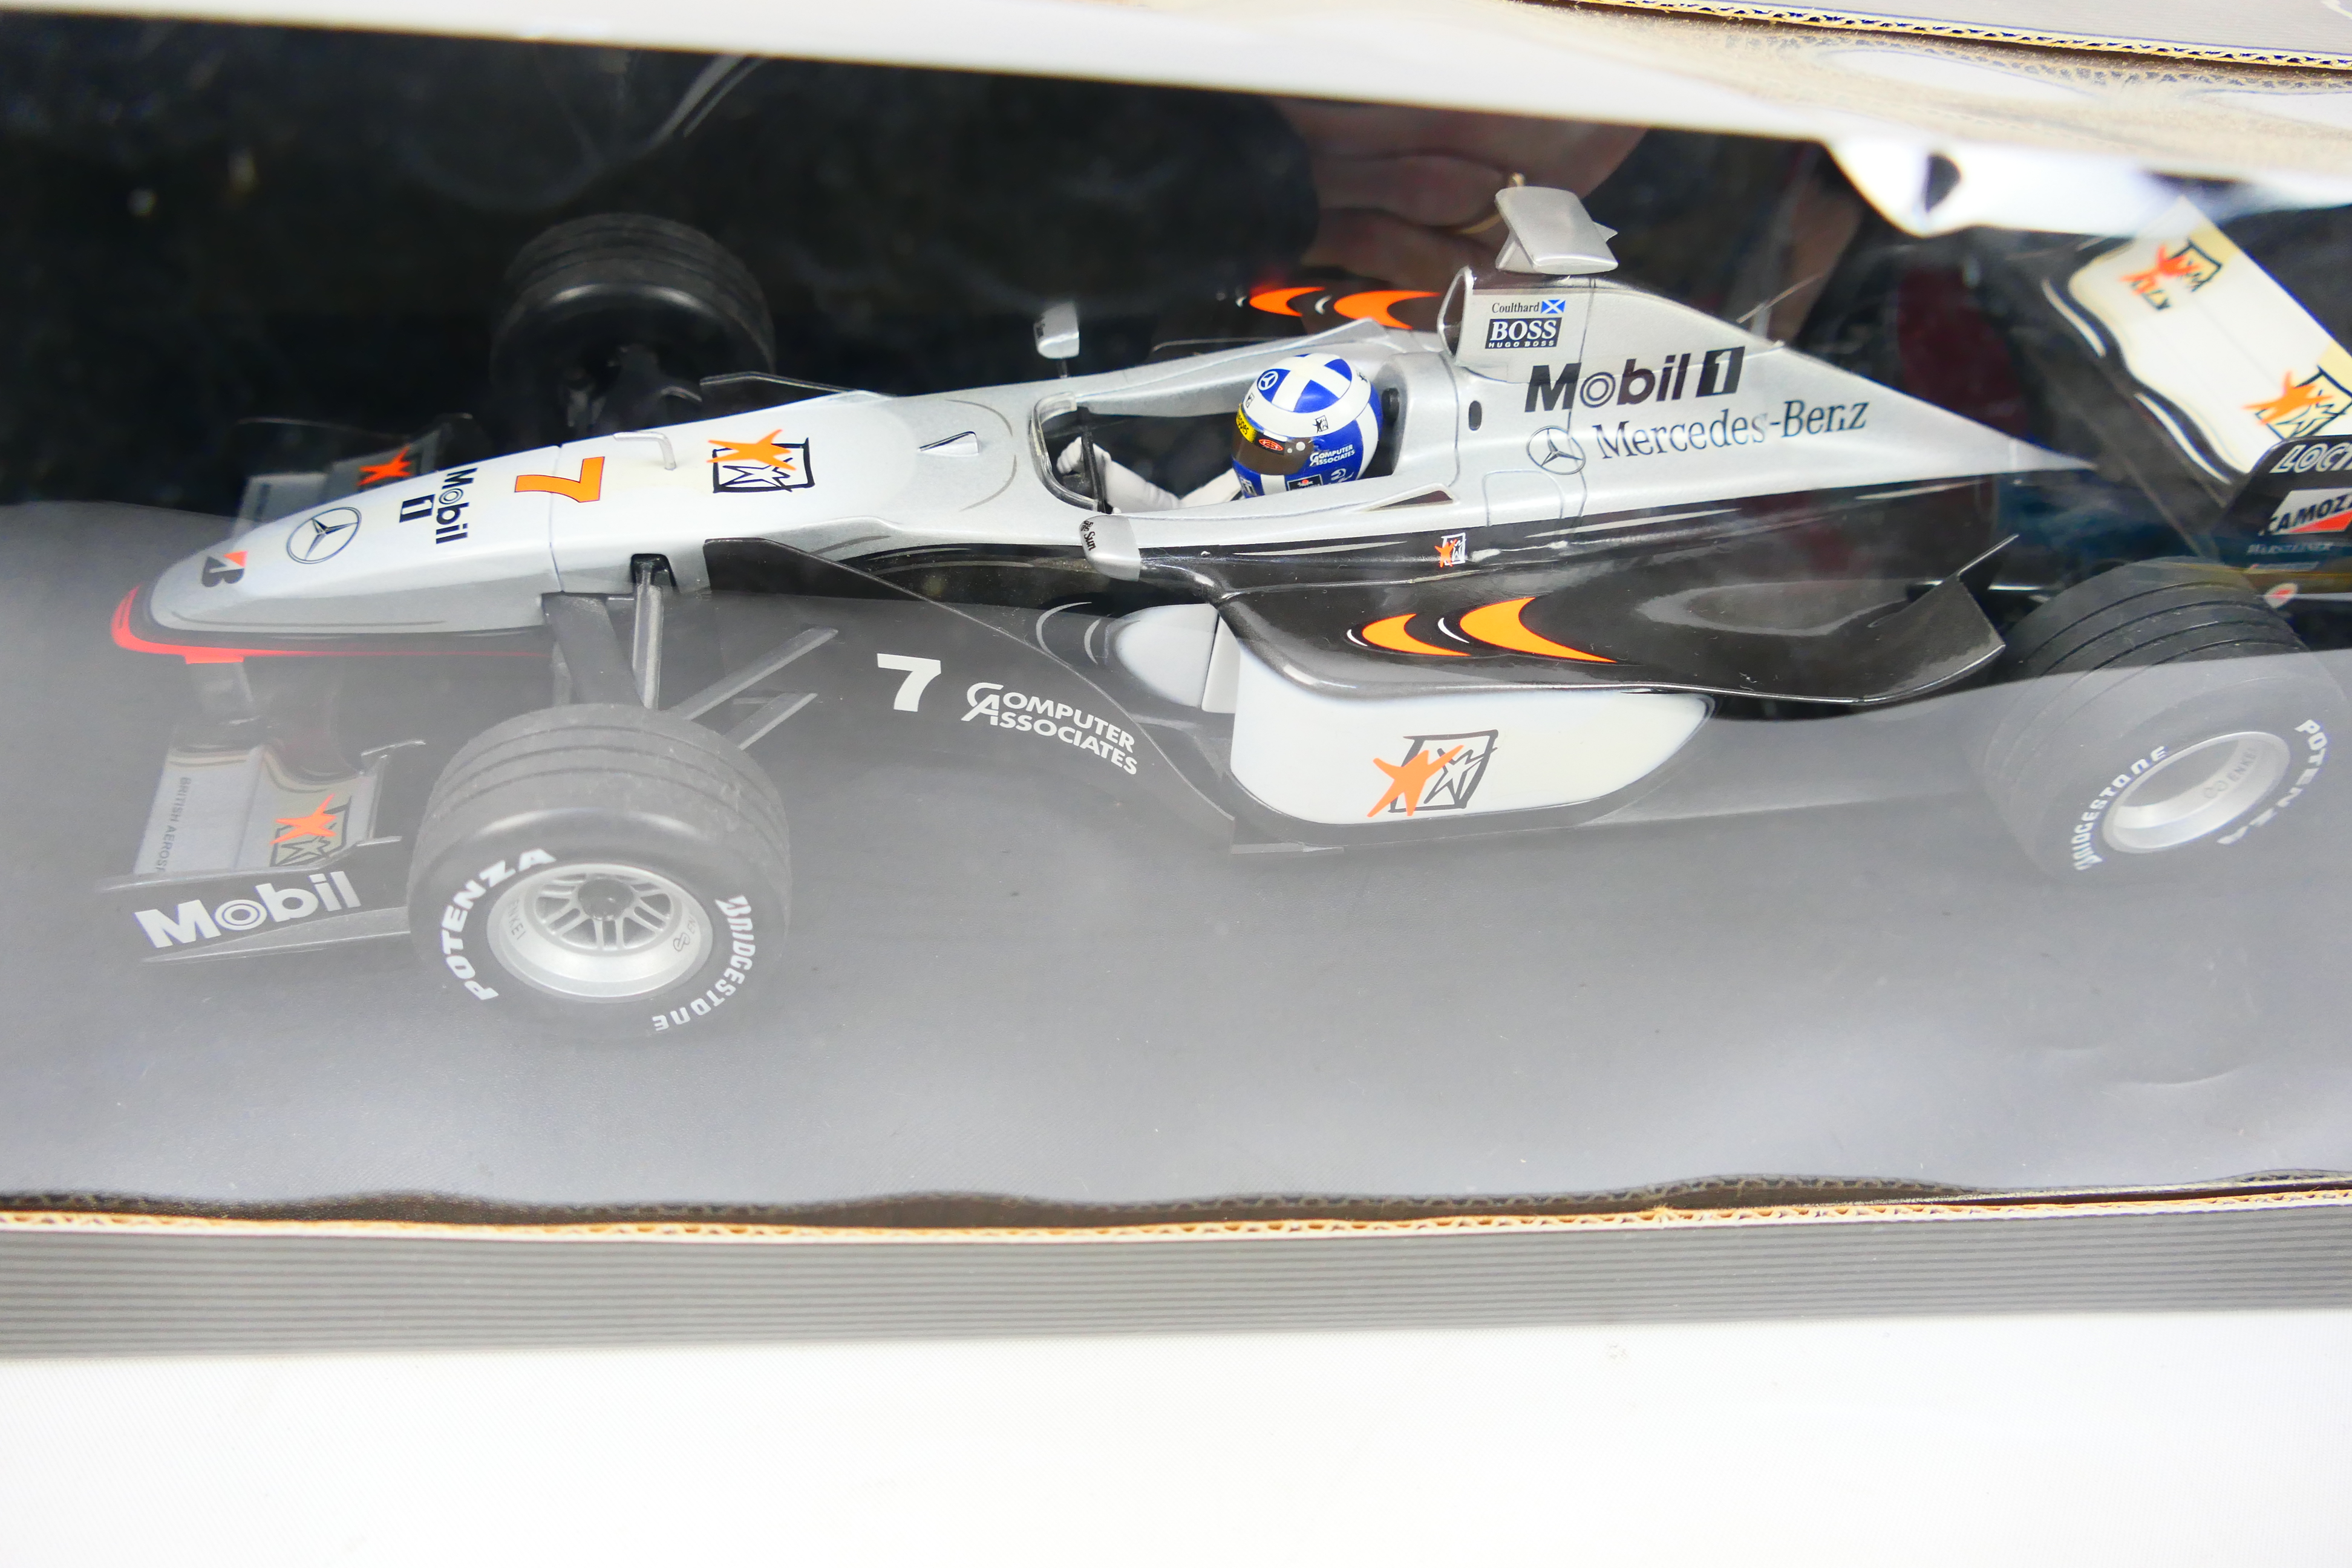 Minichamps - A boxed 1:18 scale Minichamps B6 6960220 diecast McLaren Mercedes F1 Racing Car, - Image 3 of 12